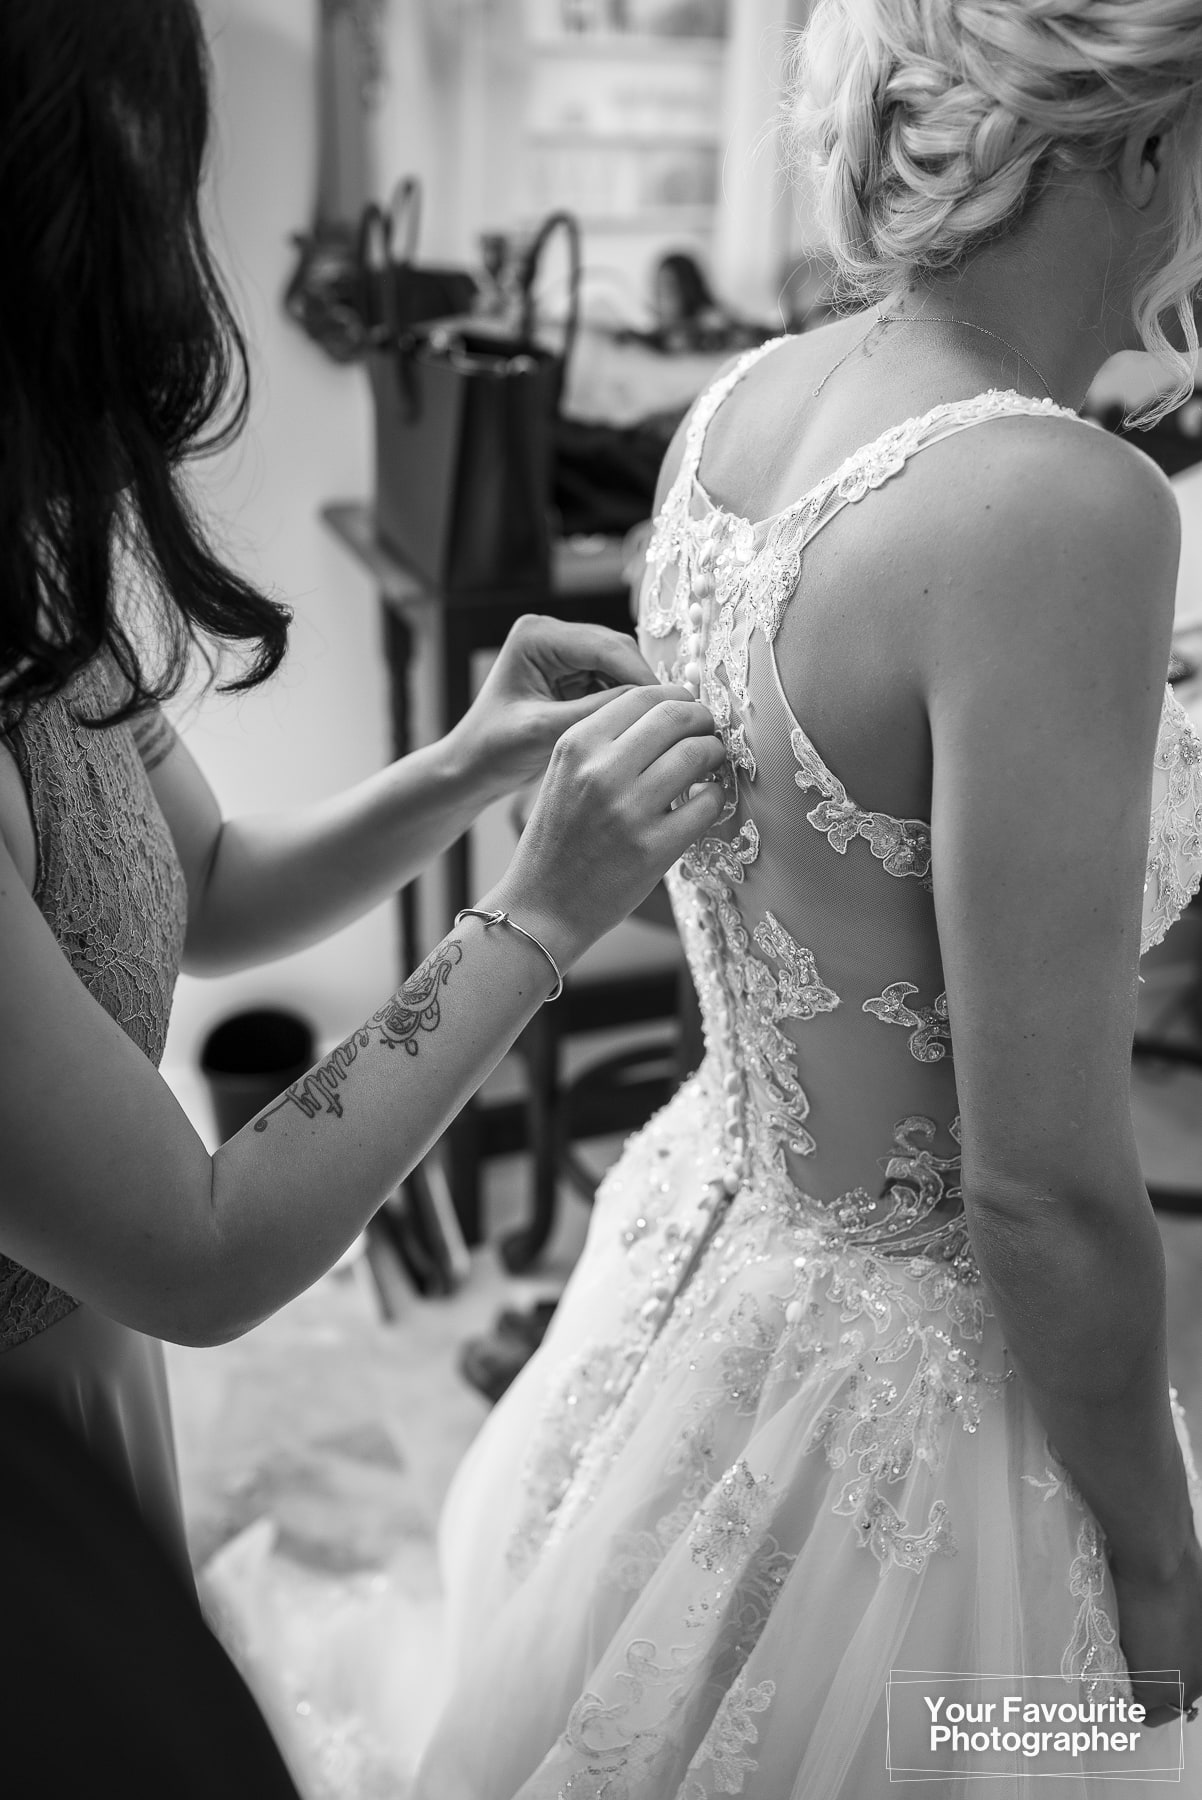 Wedding dress being buttoned up